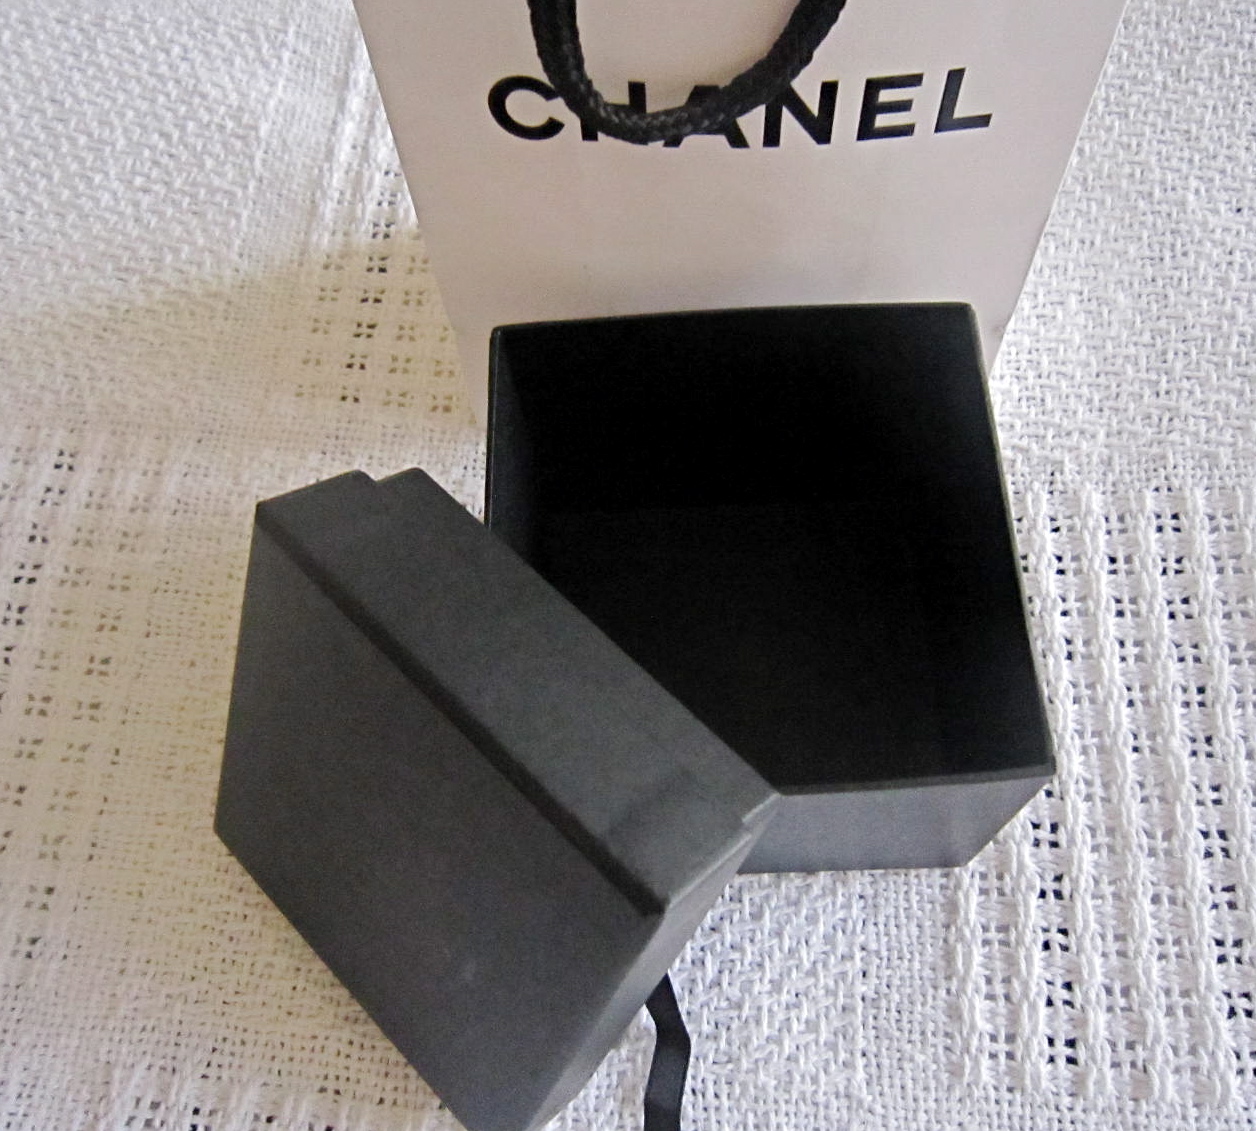 Chanel Gift Box